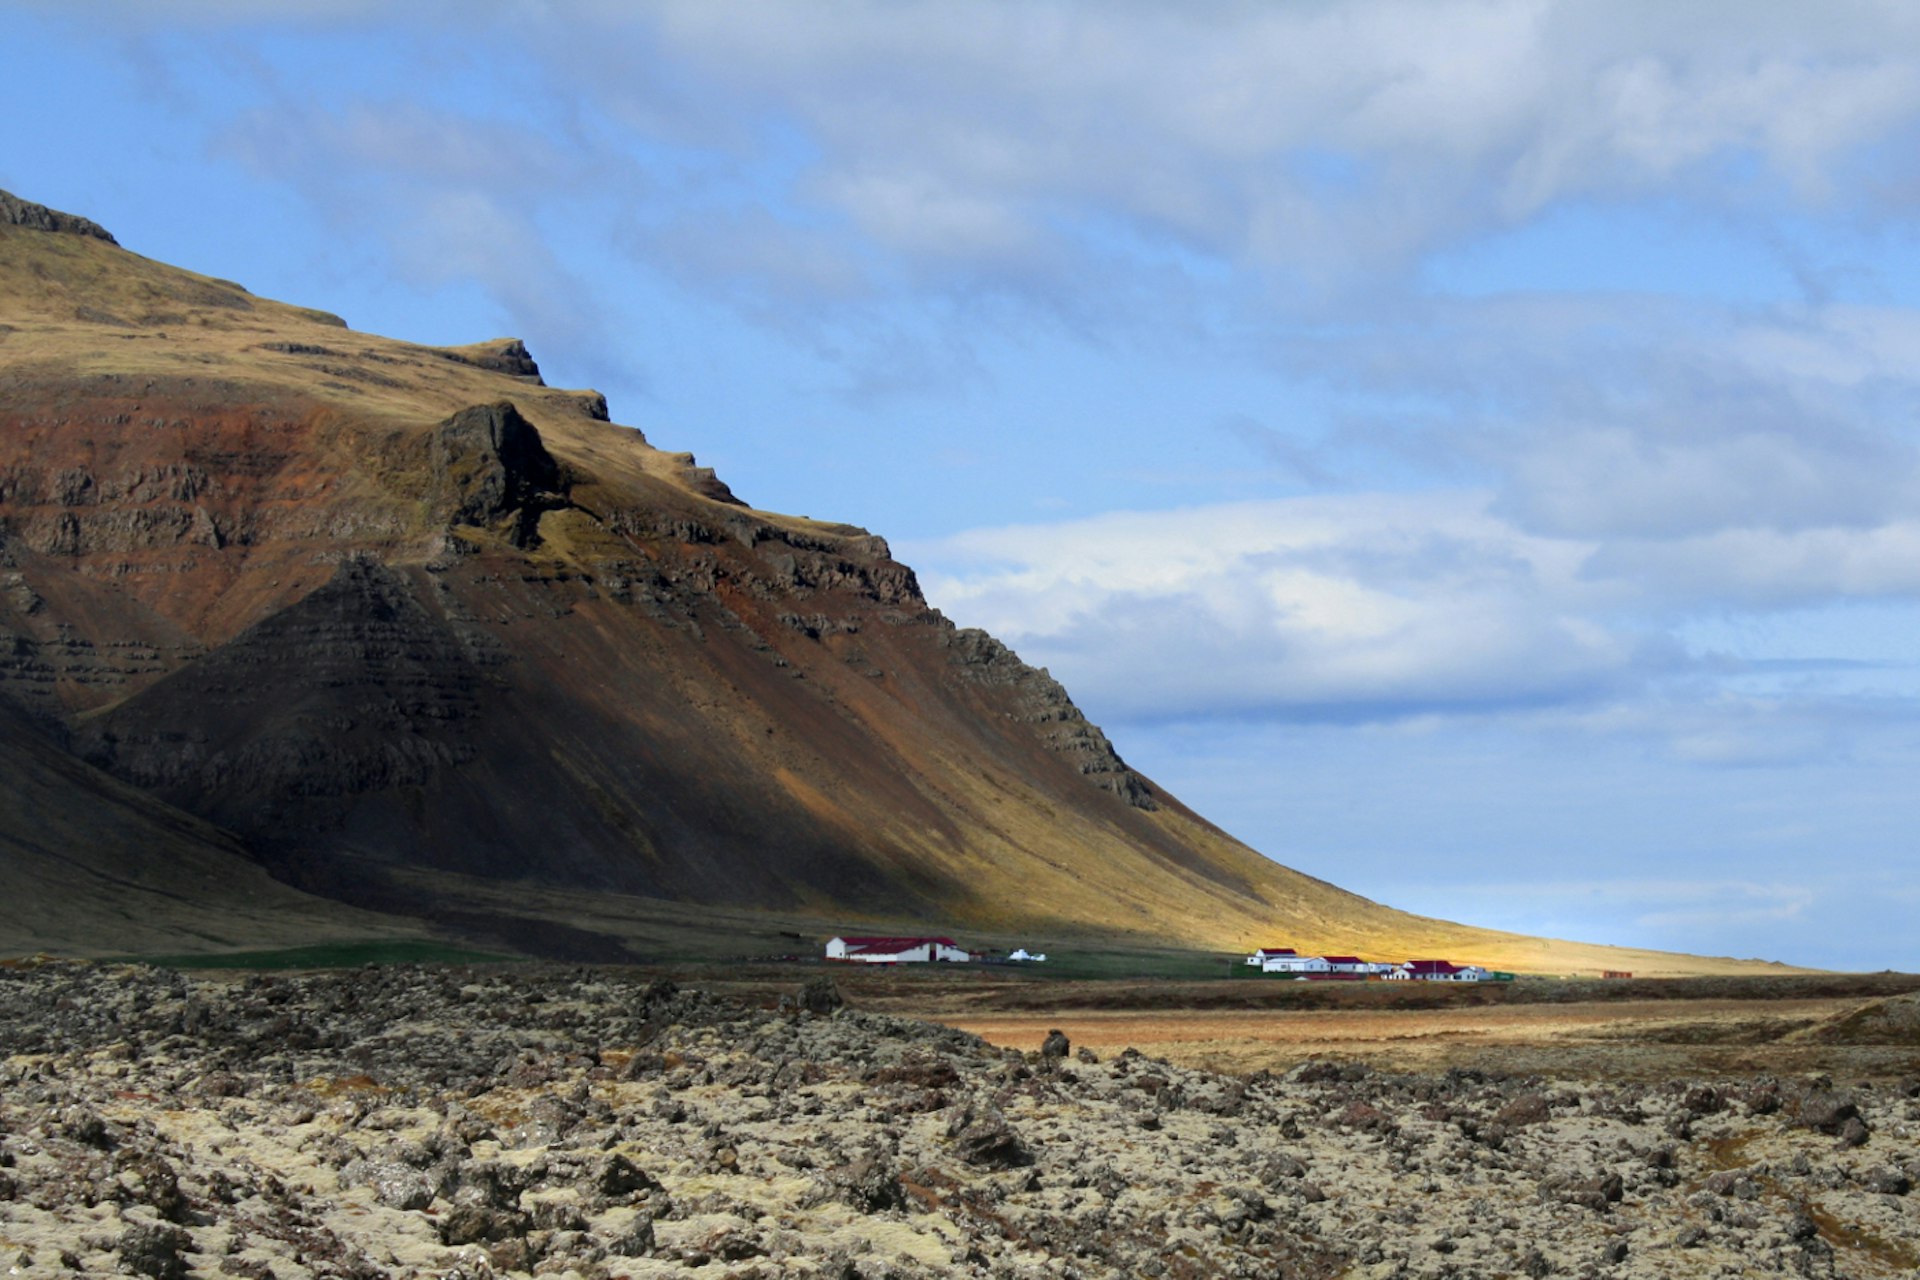 A farm on the Snæfellsnes Peninsula. Image by Bri / CC BY-SA 2.0